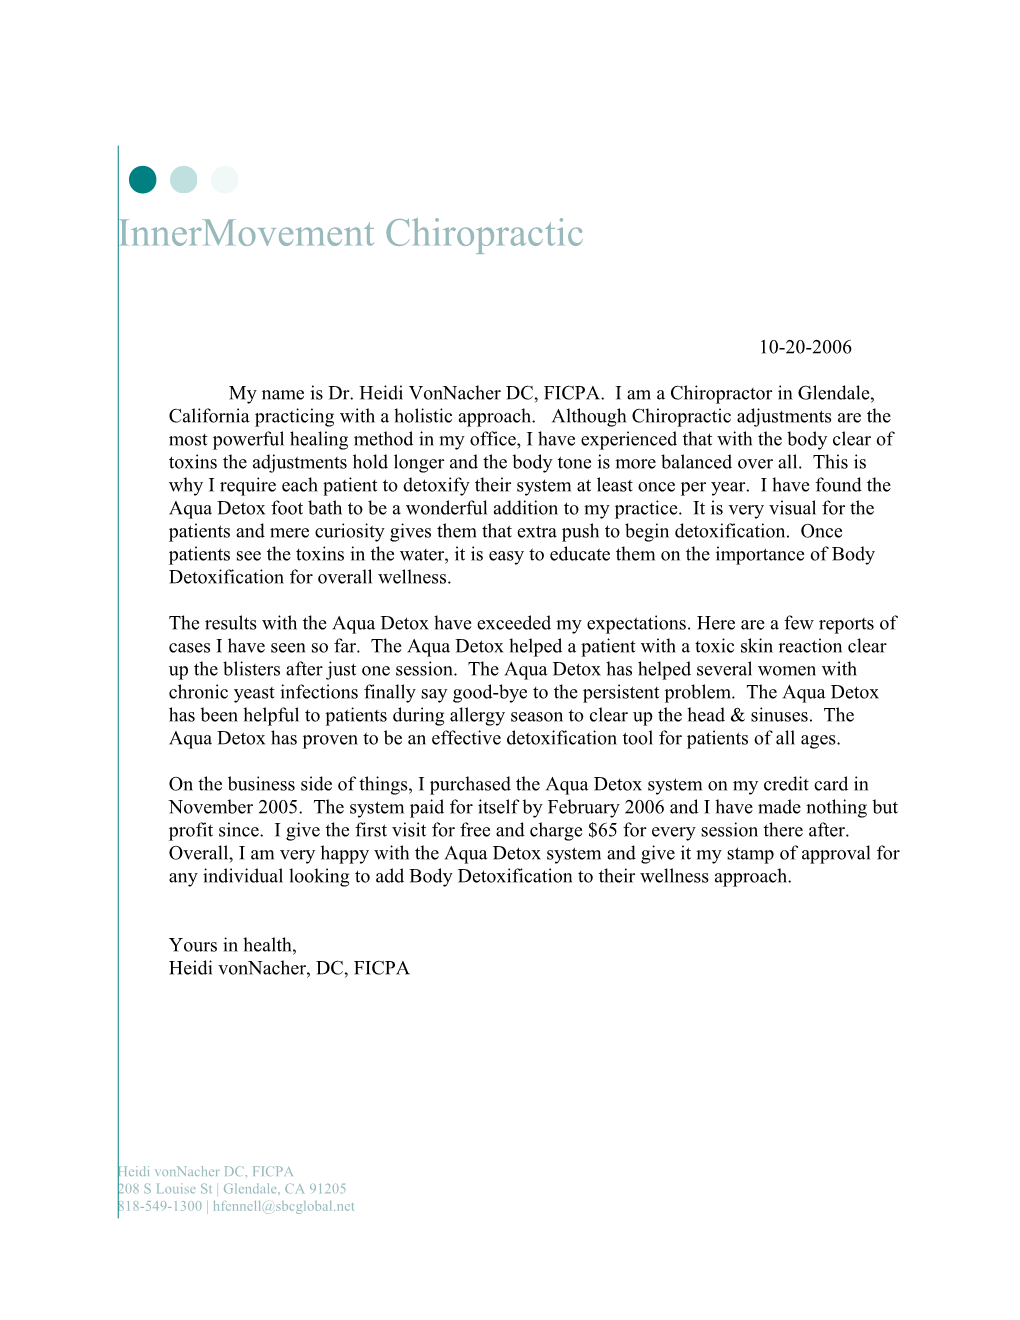 My Name Is Dr. Heidi Vonnacher DC, FICPA. I Am a Chiropractor in Glendale, California Practicing